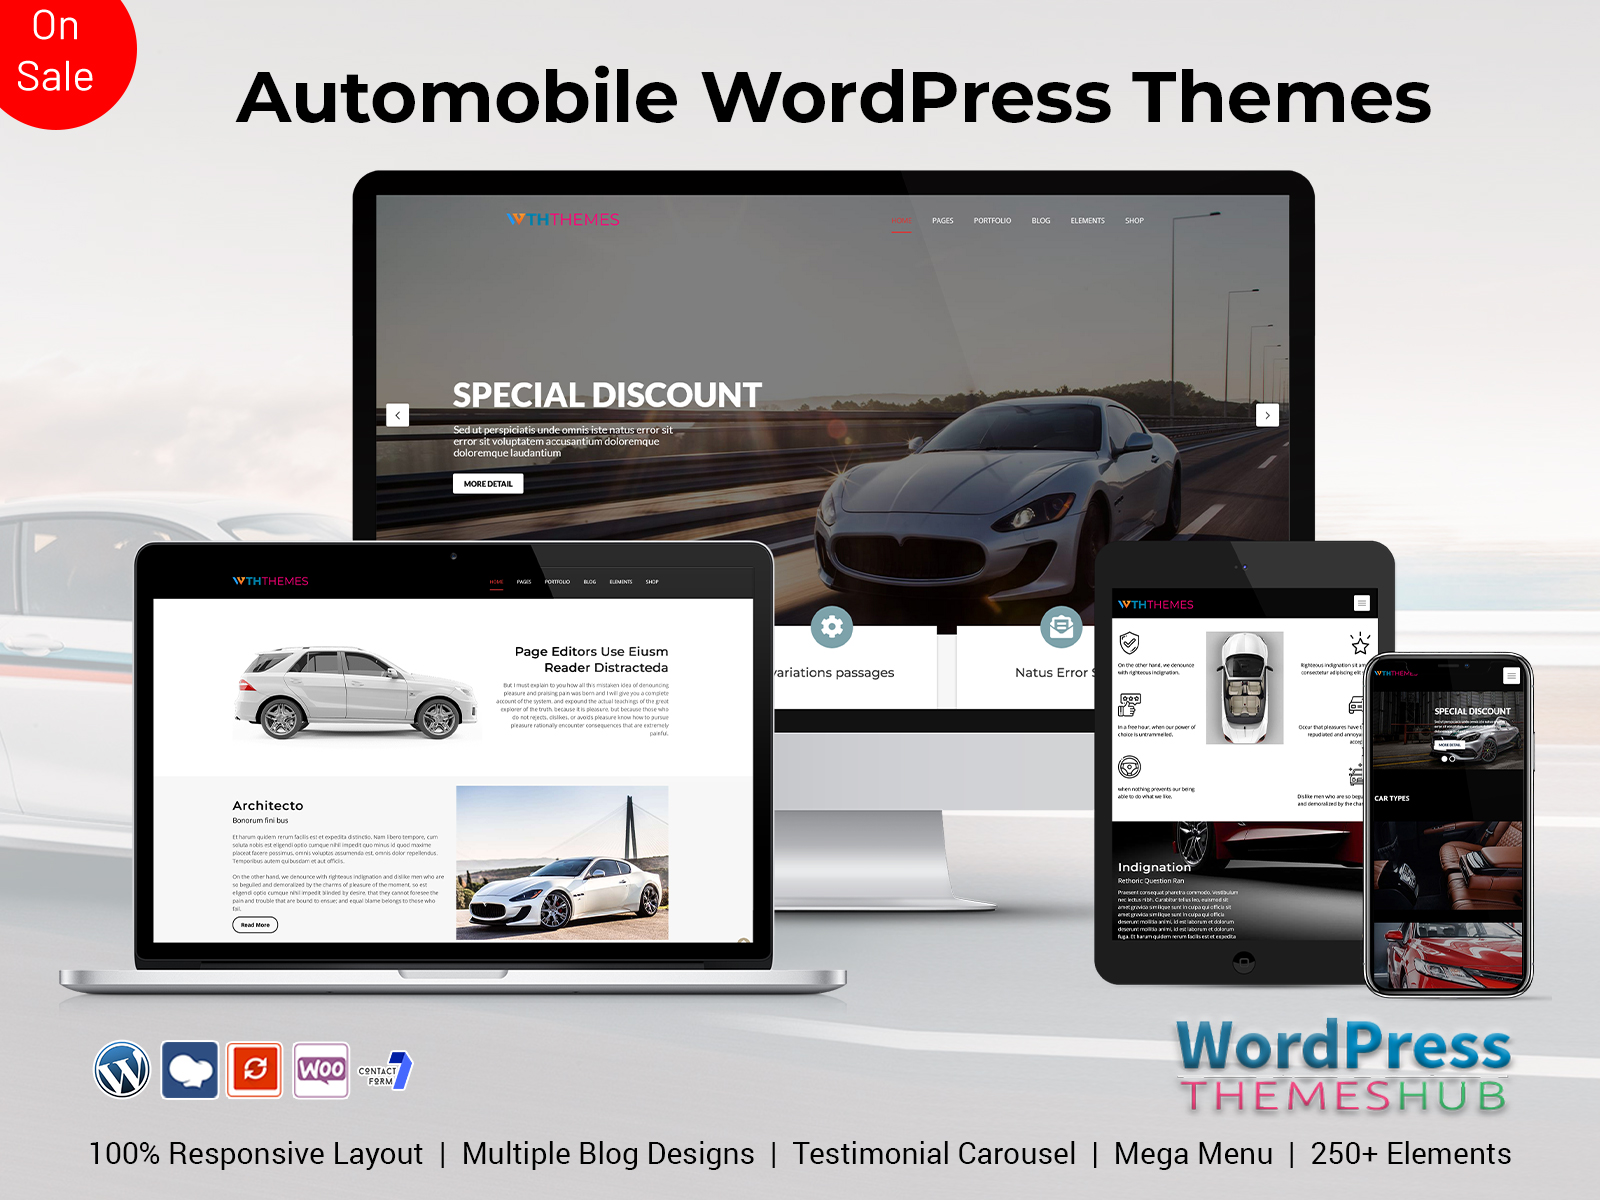 Best Automobile WordPress Theme For Car Website